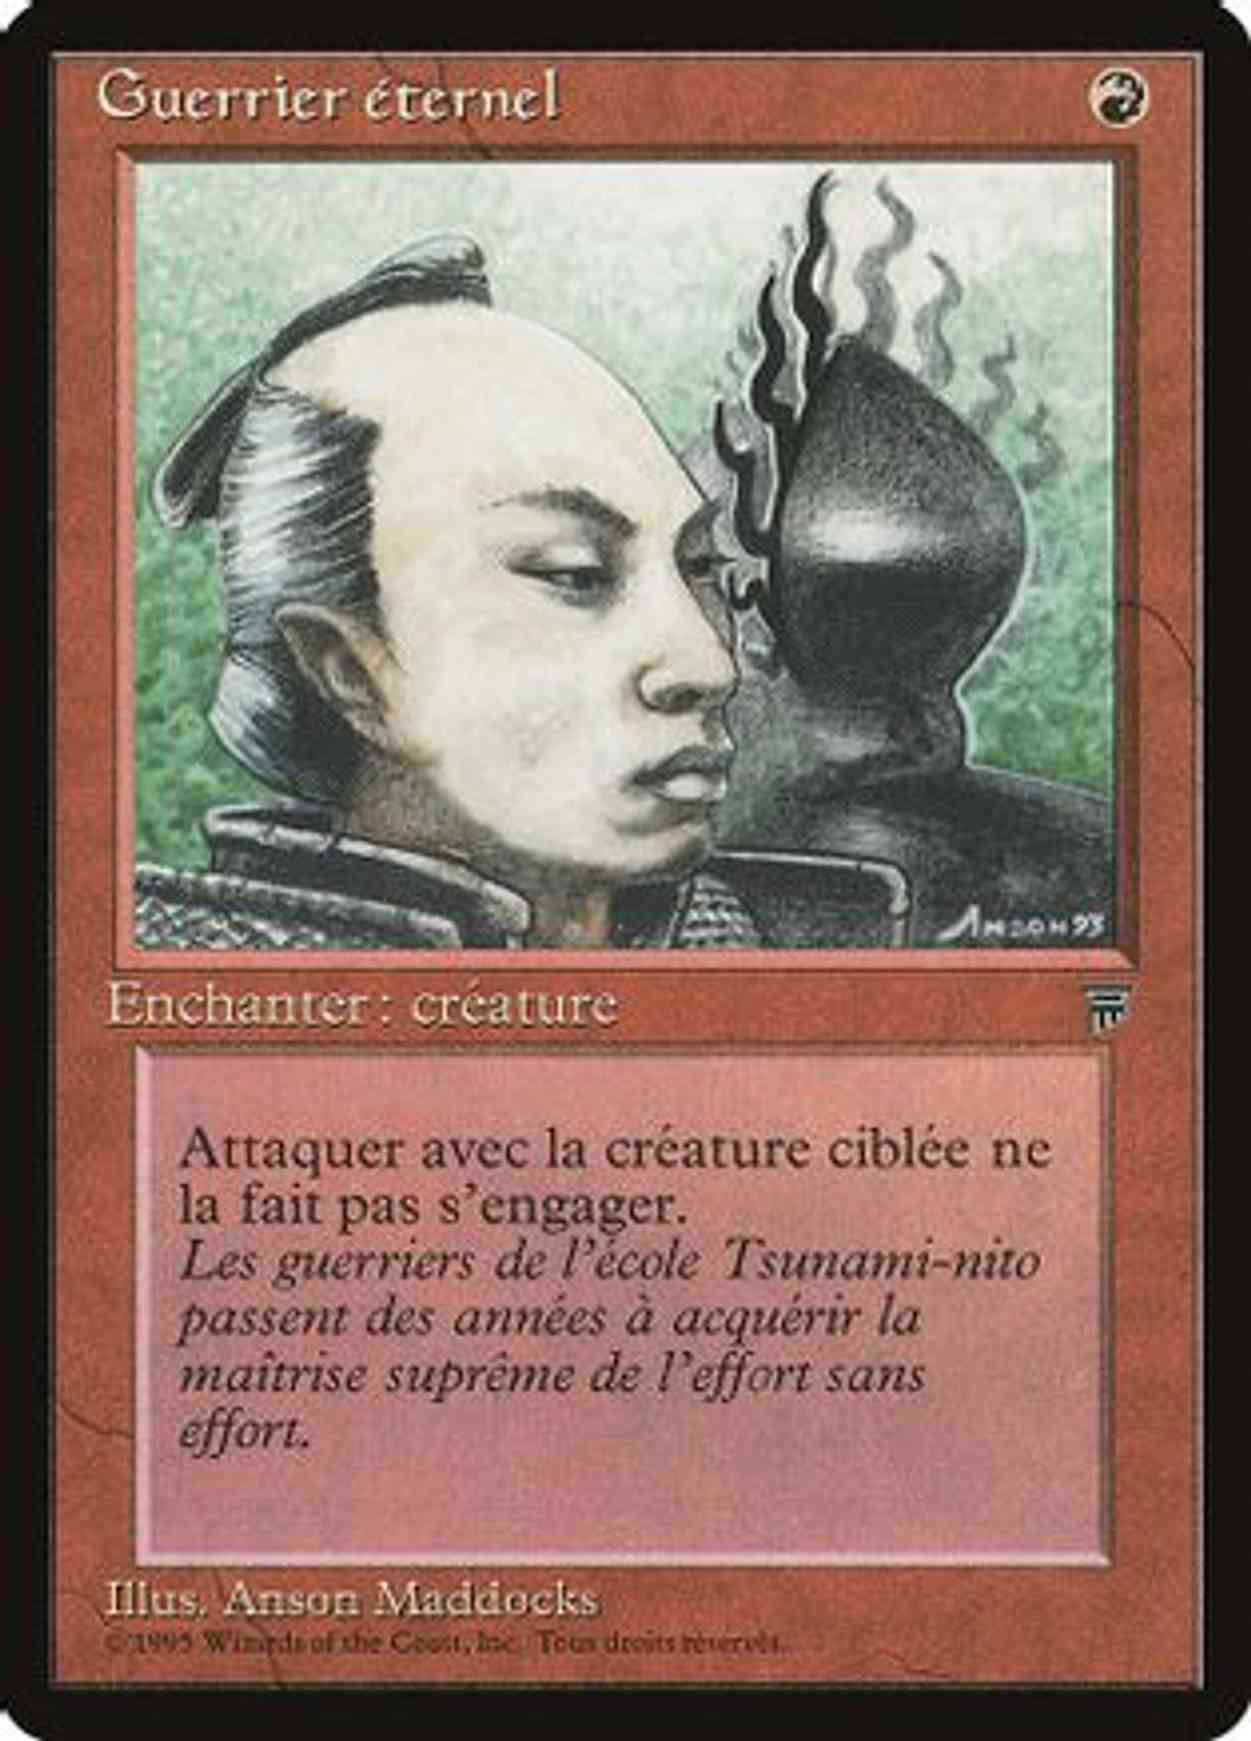 Eternal Warrior (French) - "Guerrier eternel" magic card front